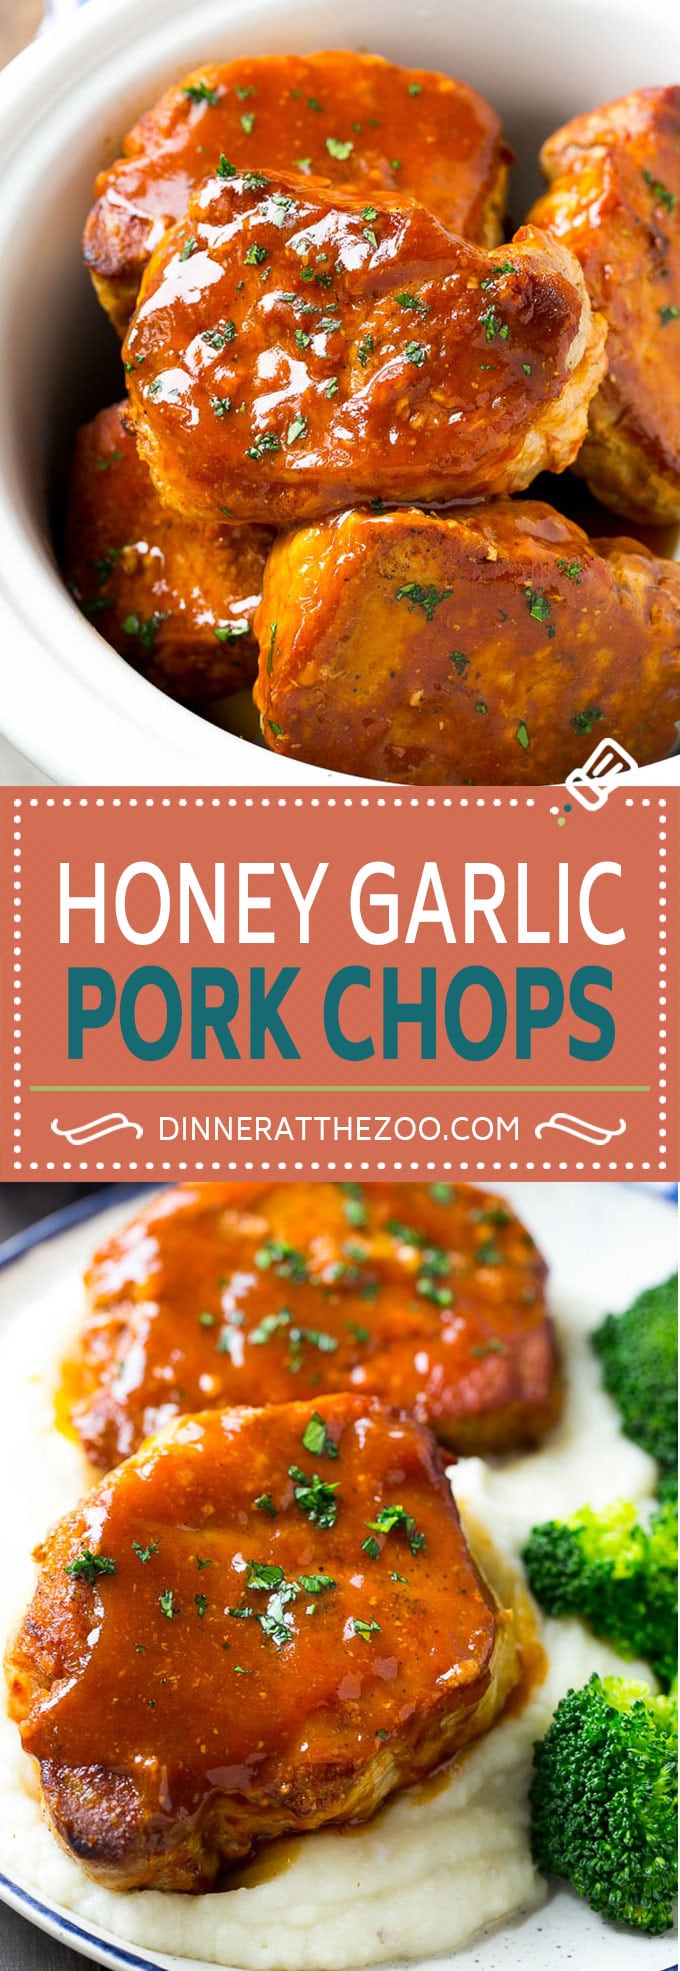 Honey Garlic Pork Chops Recipe | Slow Cooker Pork Chops | Crock Pot Pork Chops | Boneless Pork Chops Recipe #porkchops #pork #slowcooker #crockpot #dinner #dinneratthezoo